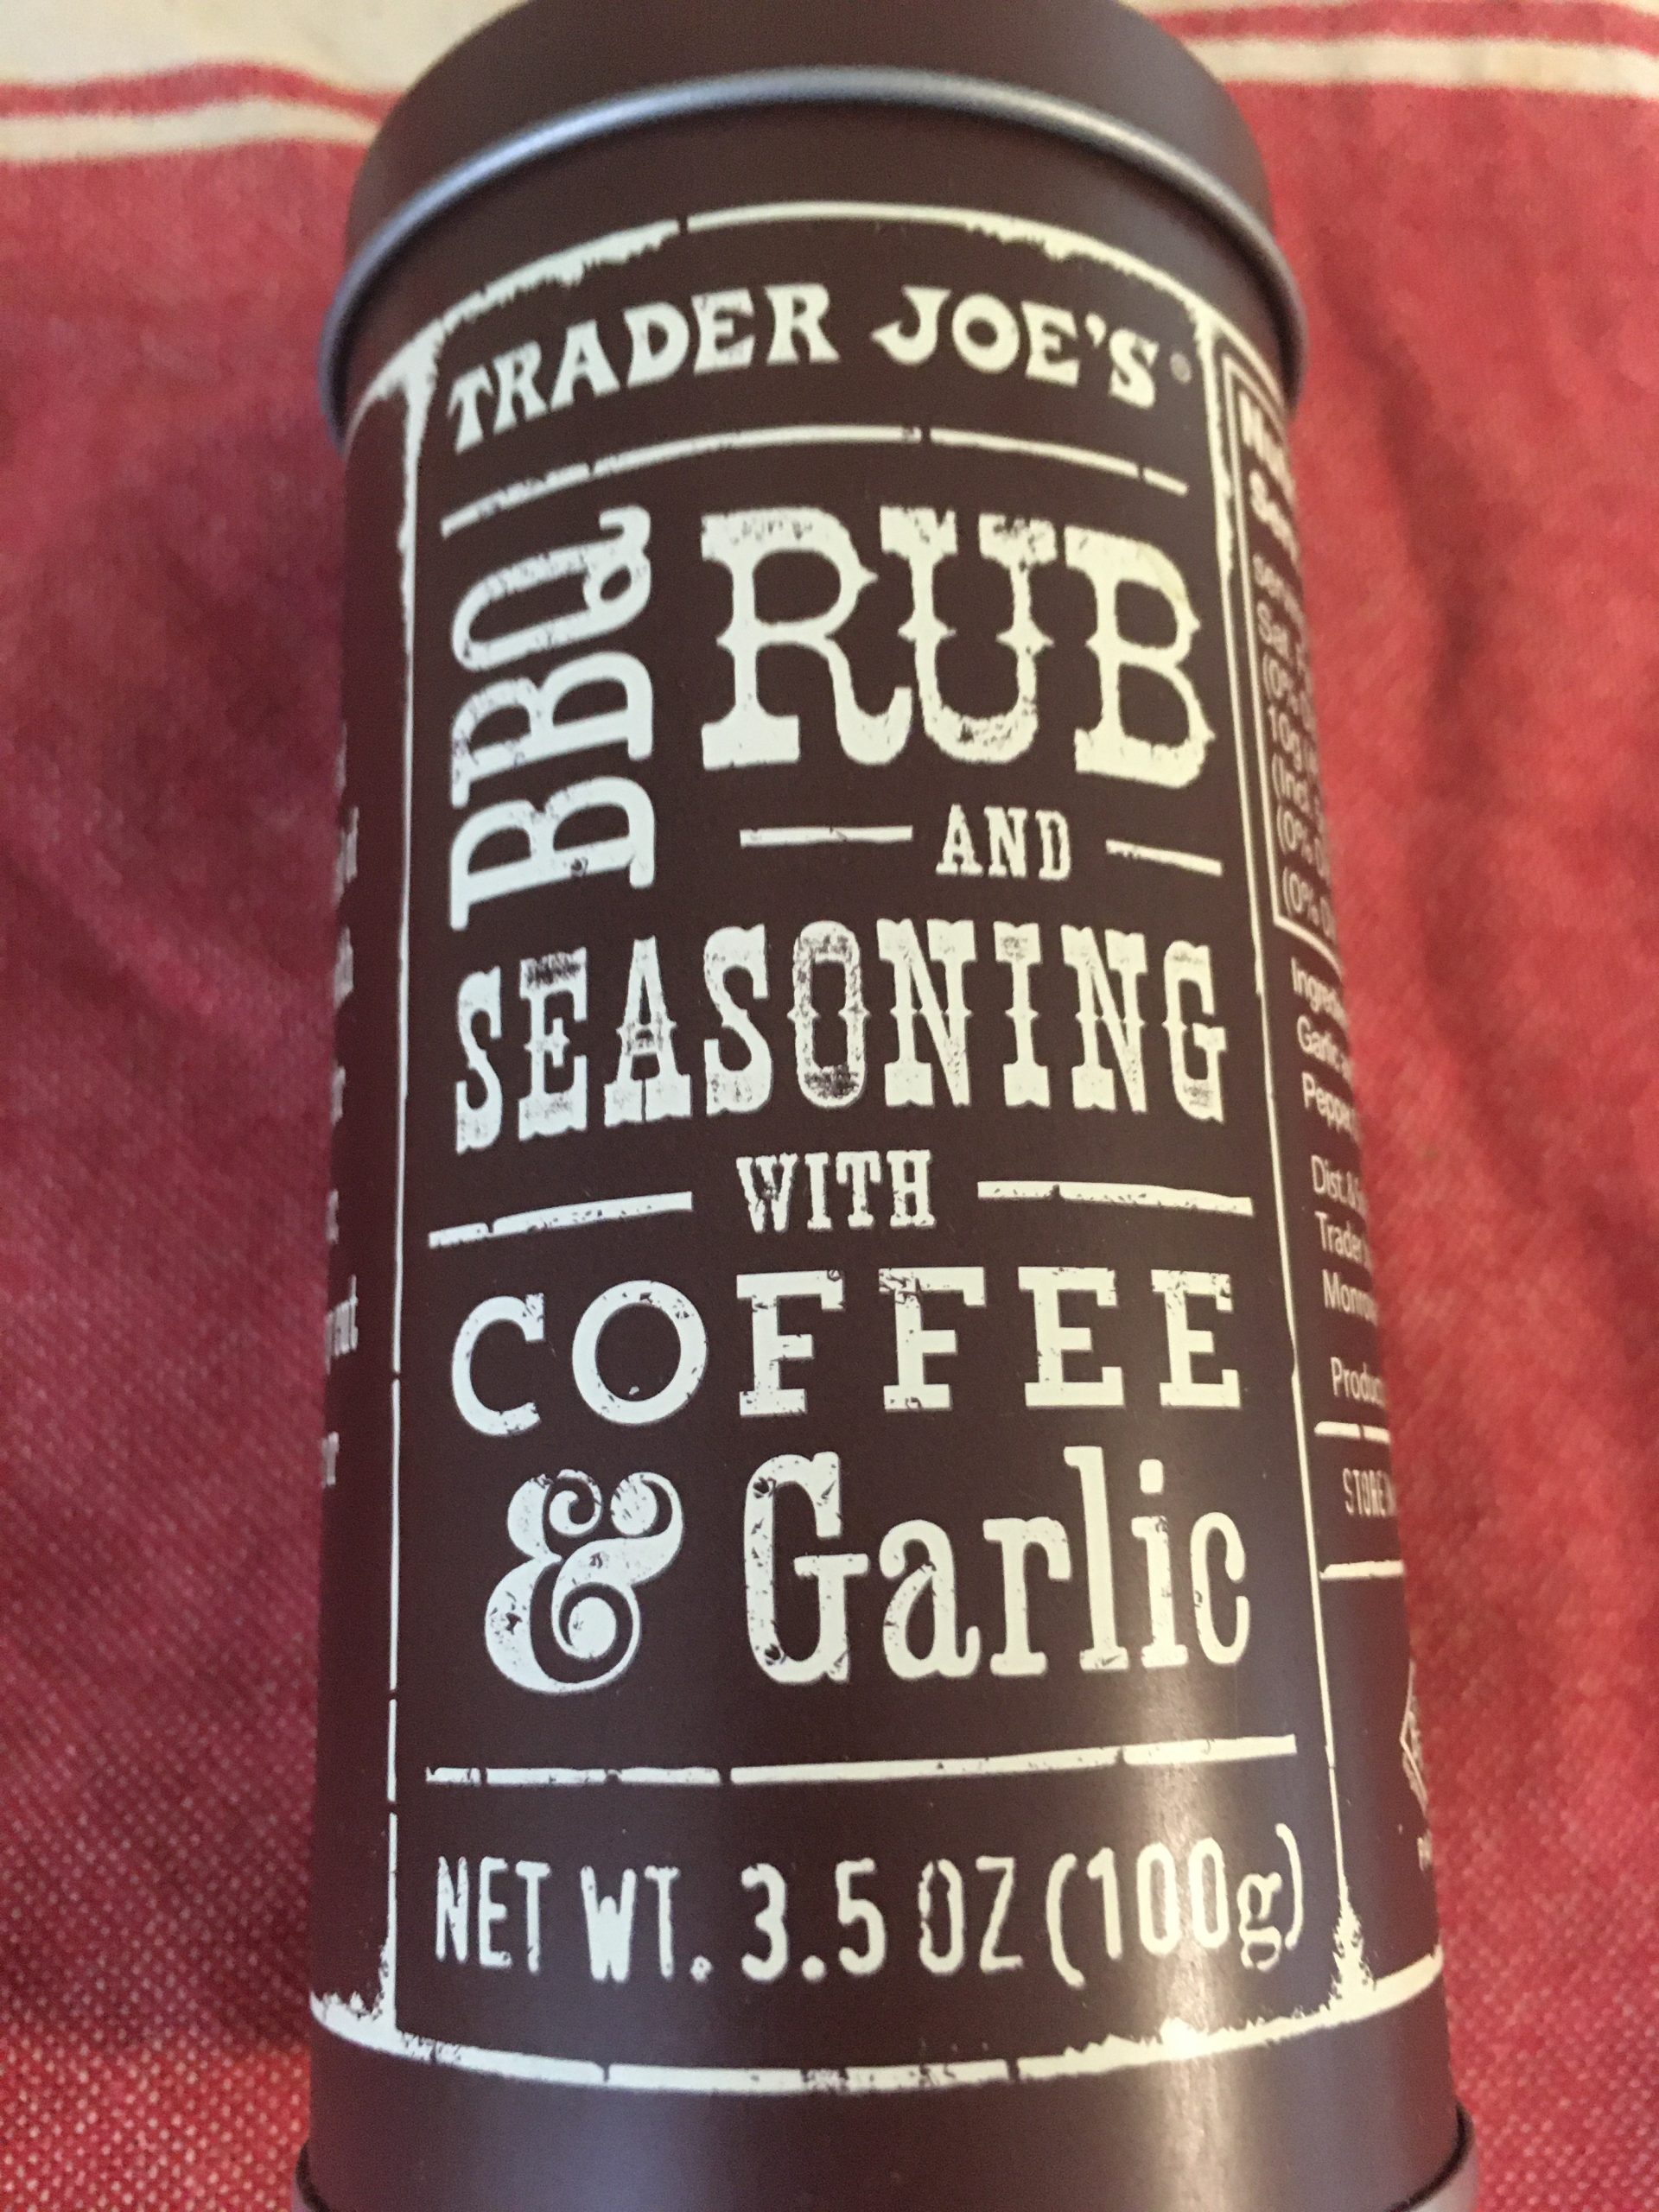 Trader Joe's BBQ Rub and Seasoning with Coffee and Garlic - BecomeBetty.com